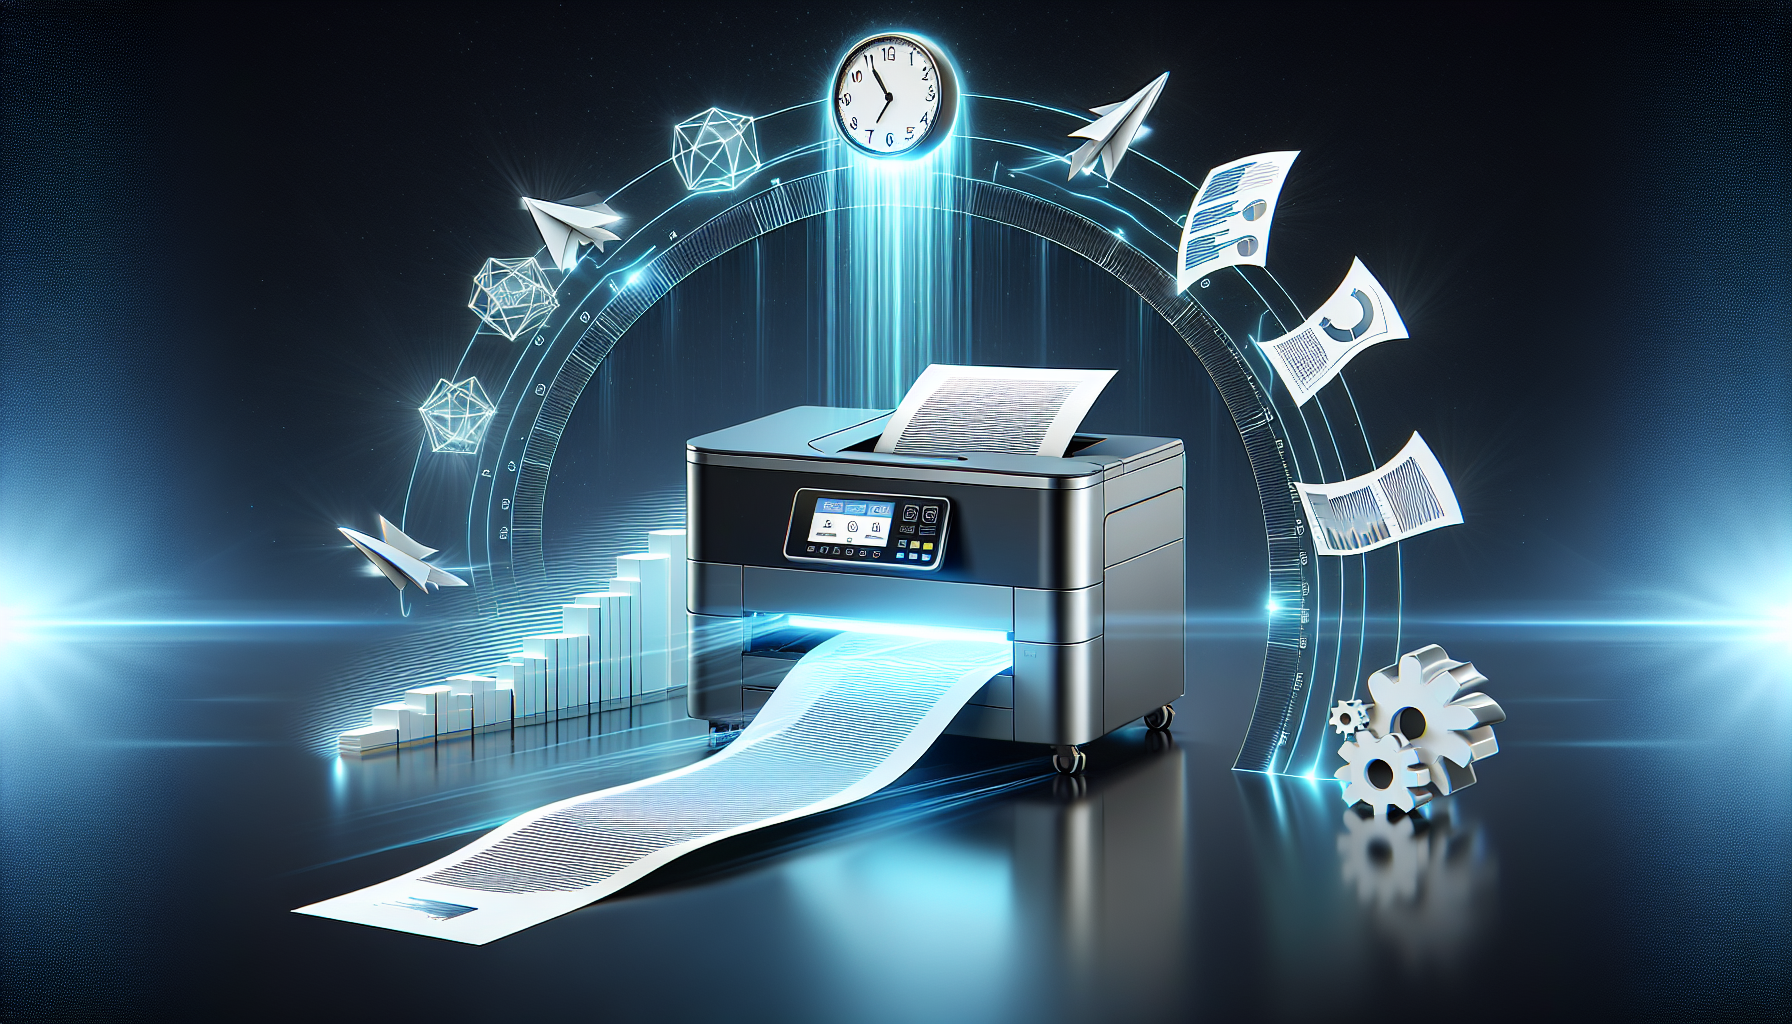 Illustration of enhanced print management for operational efficiency